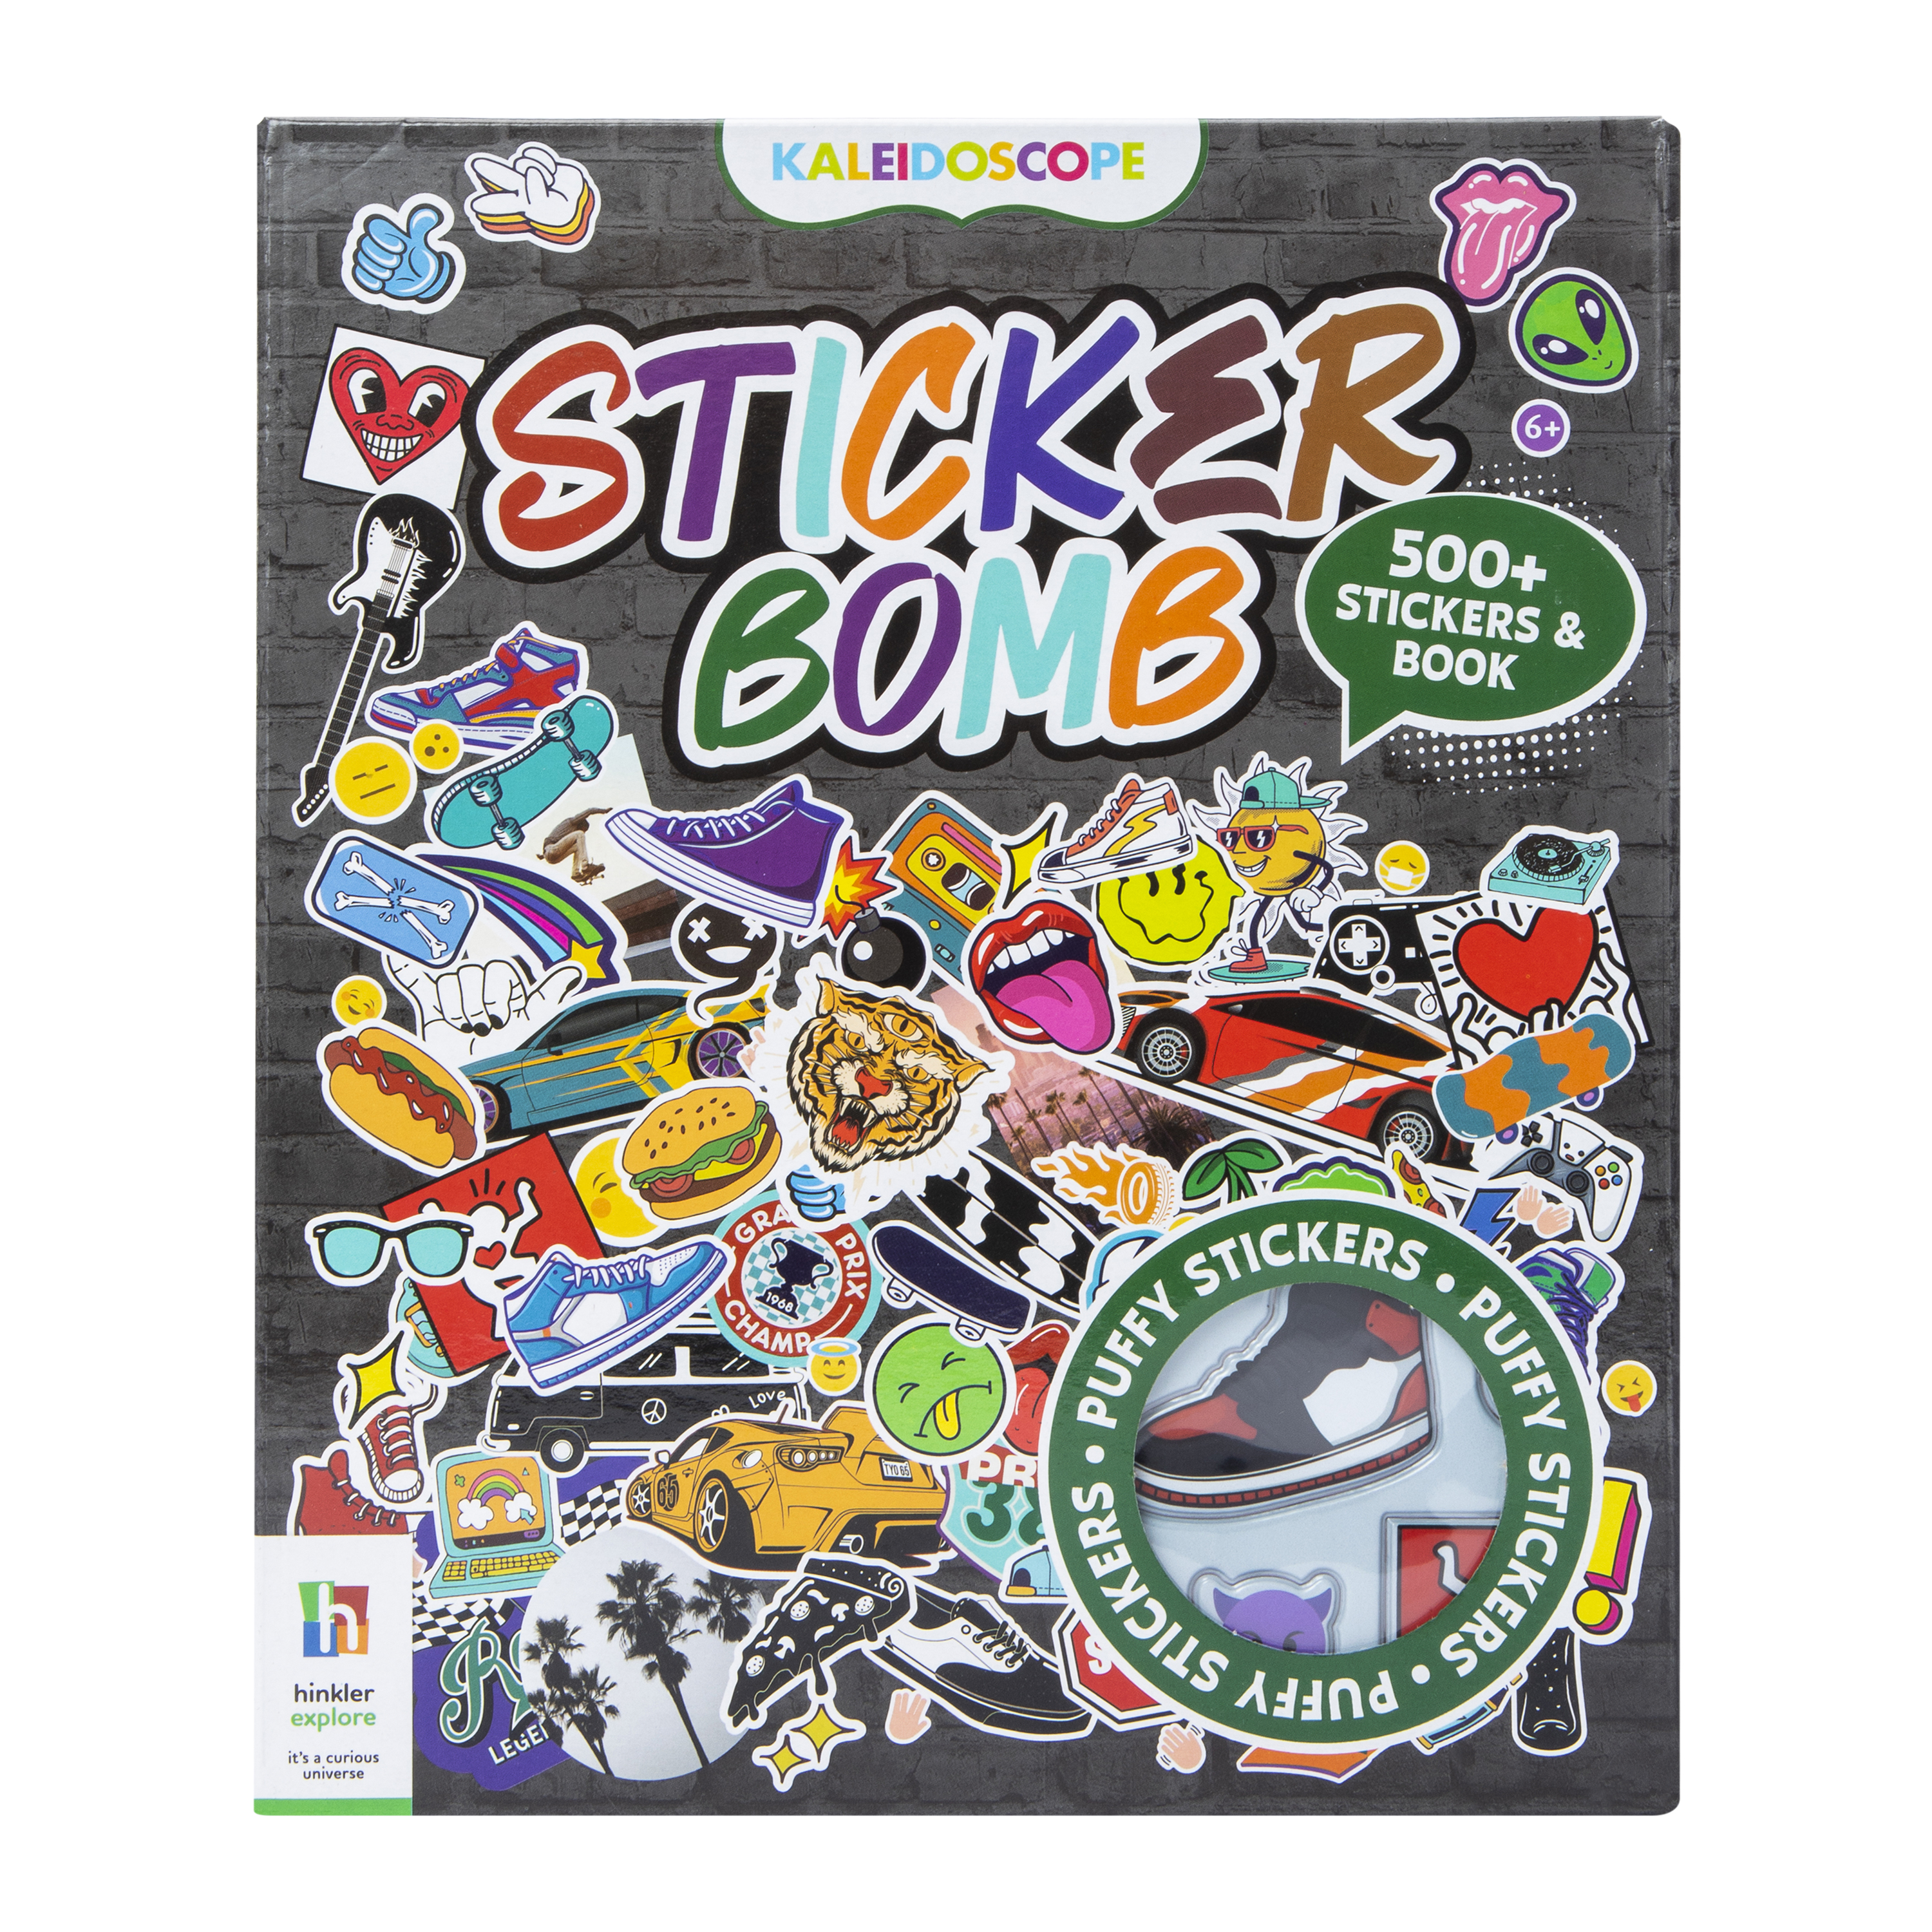 Kaleidoscope Sticker Bomb With 500+ Stickers & Book